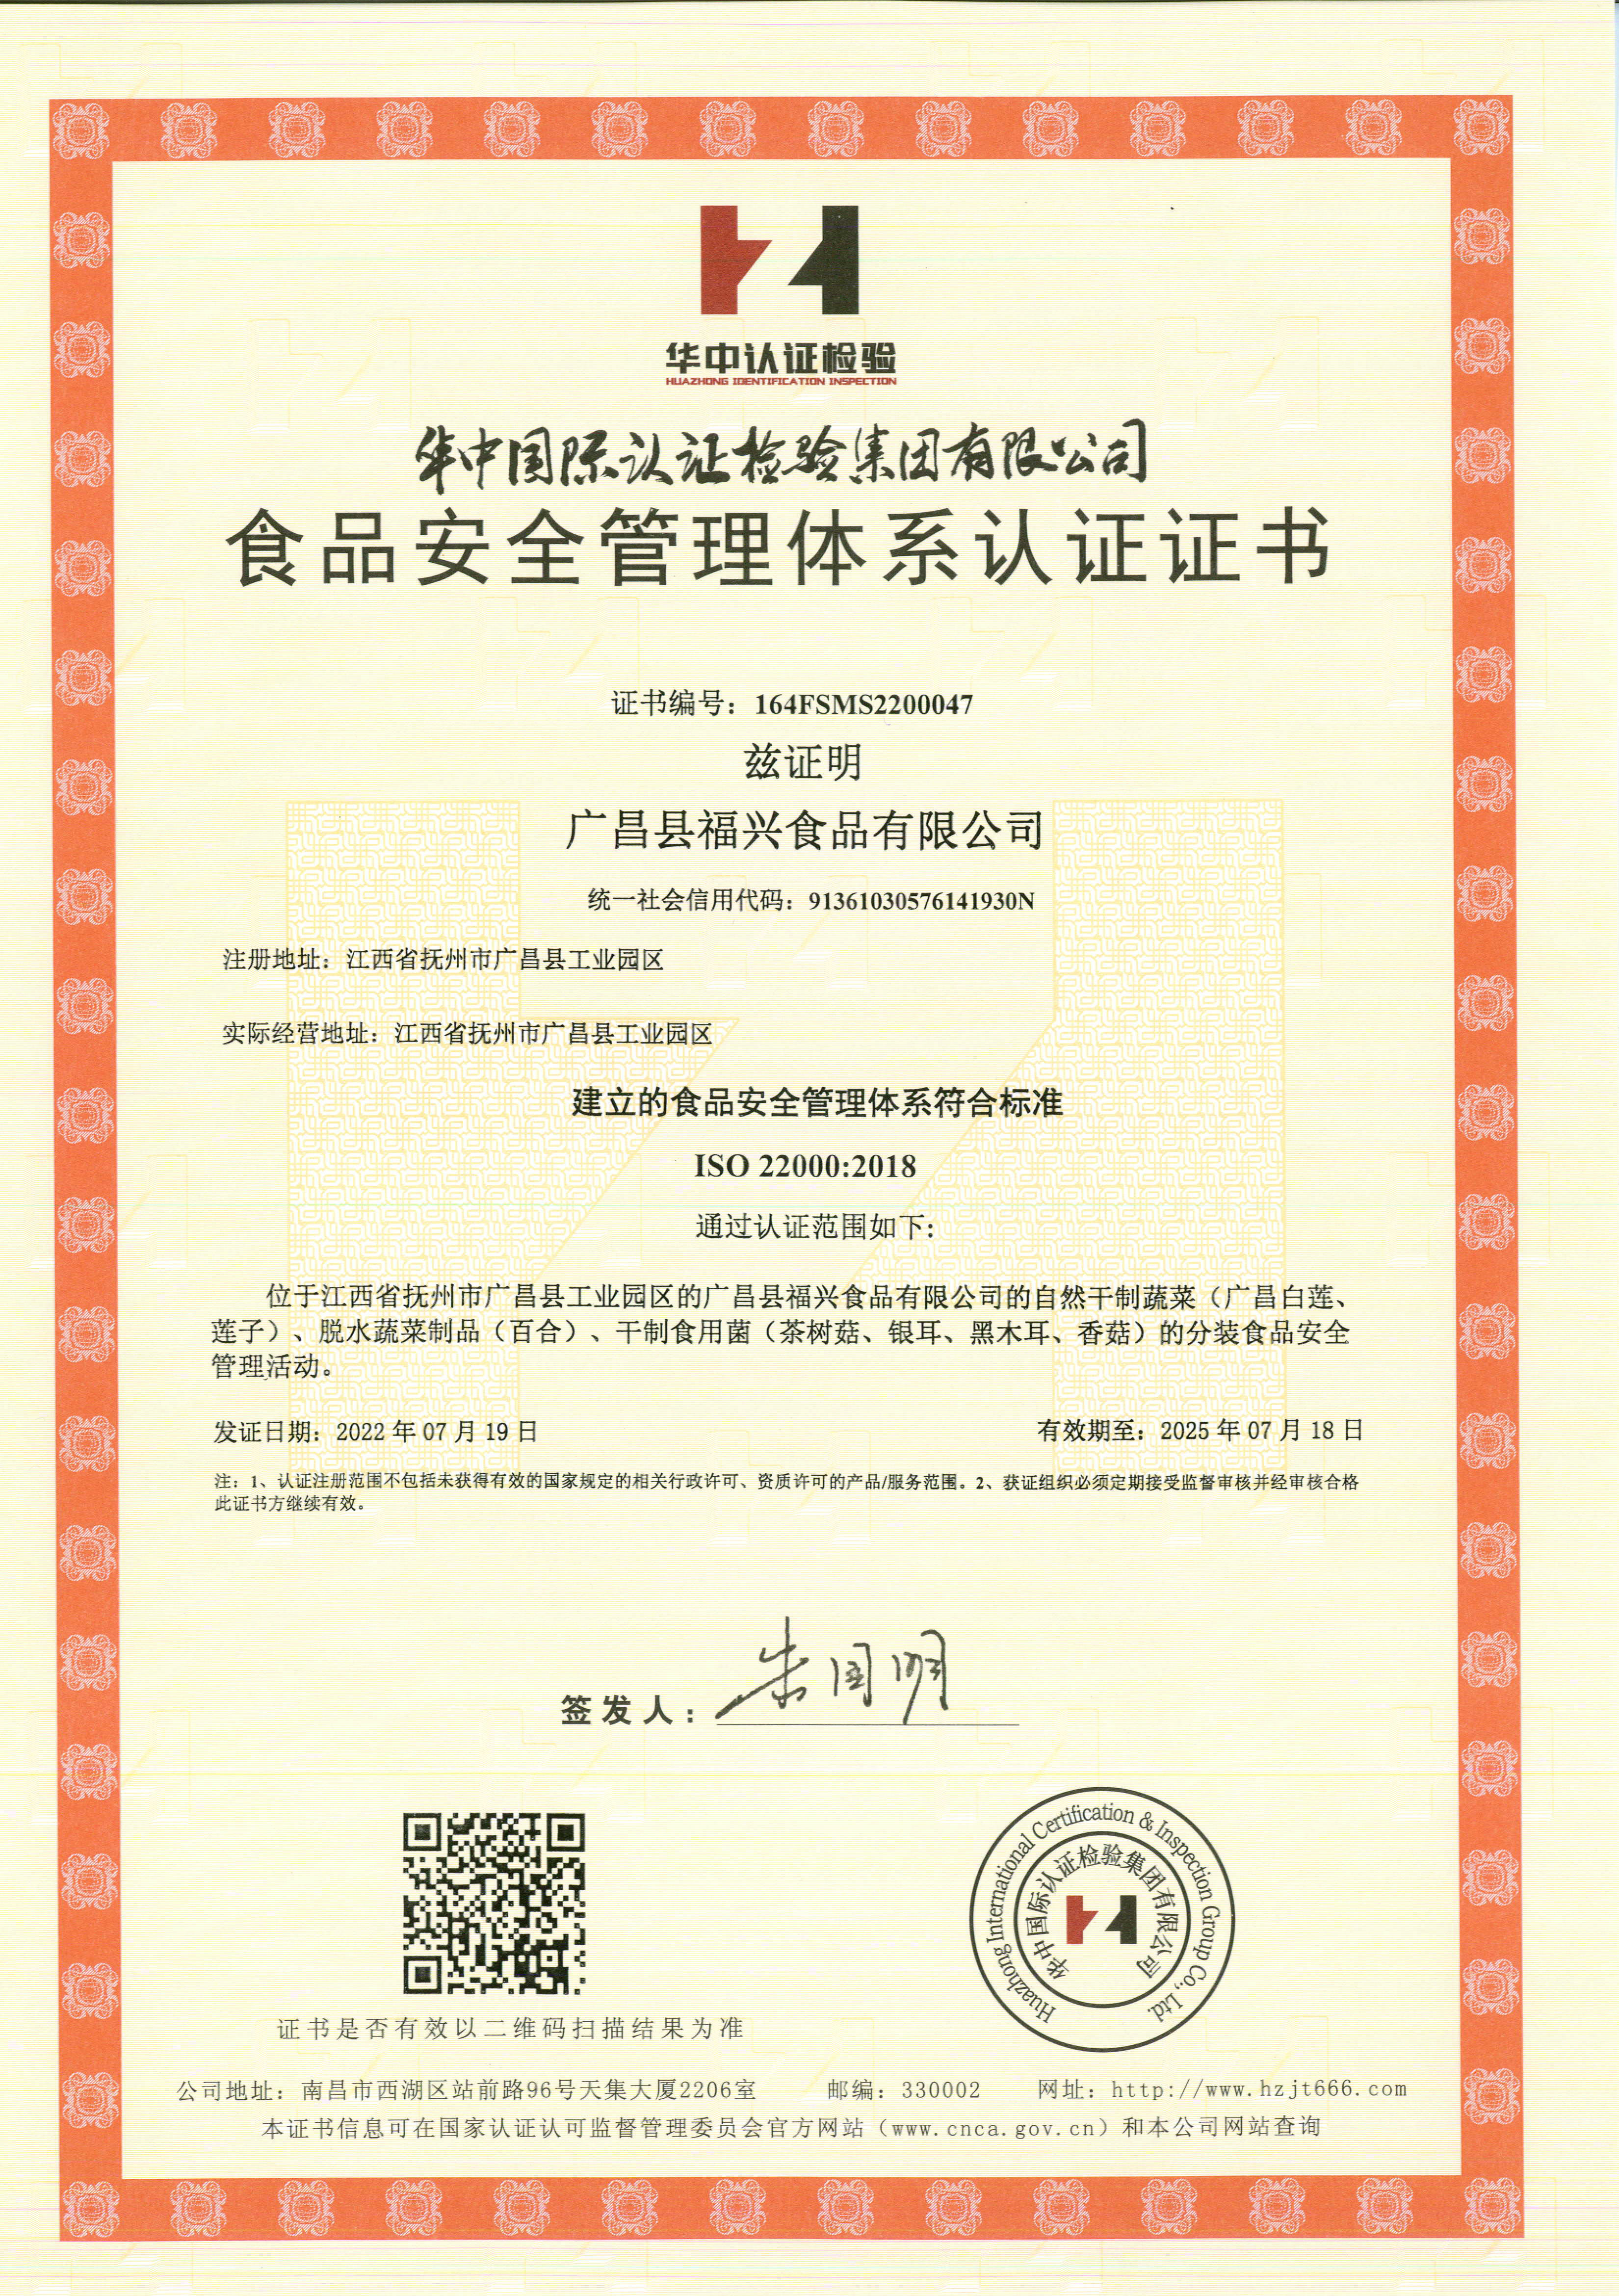 Food Safety Management System Certification